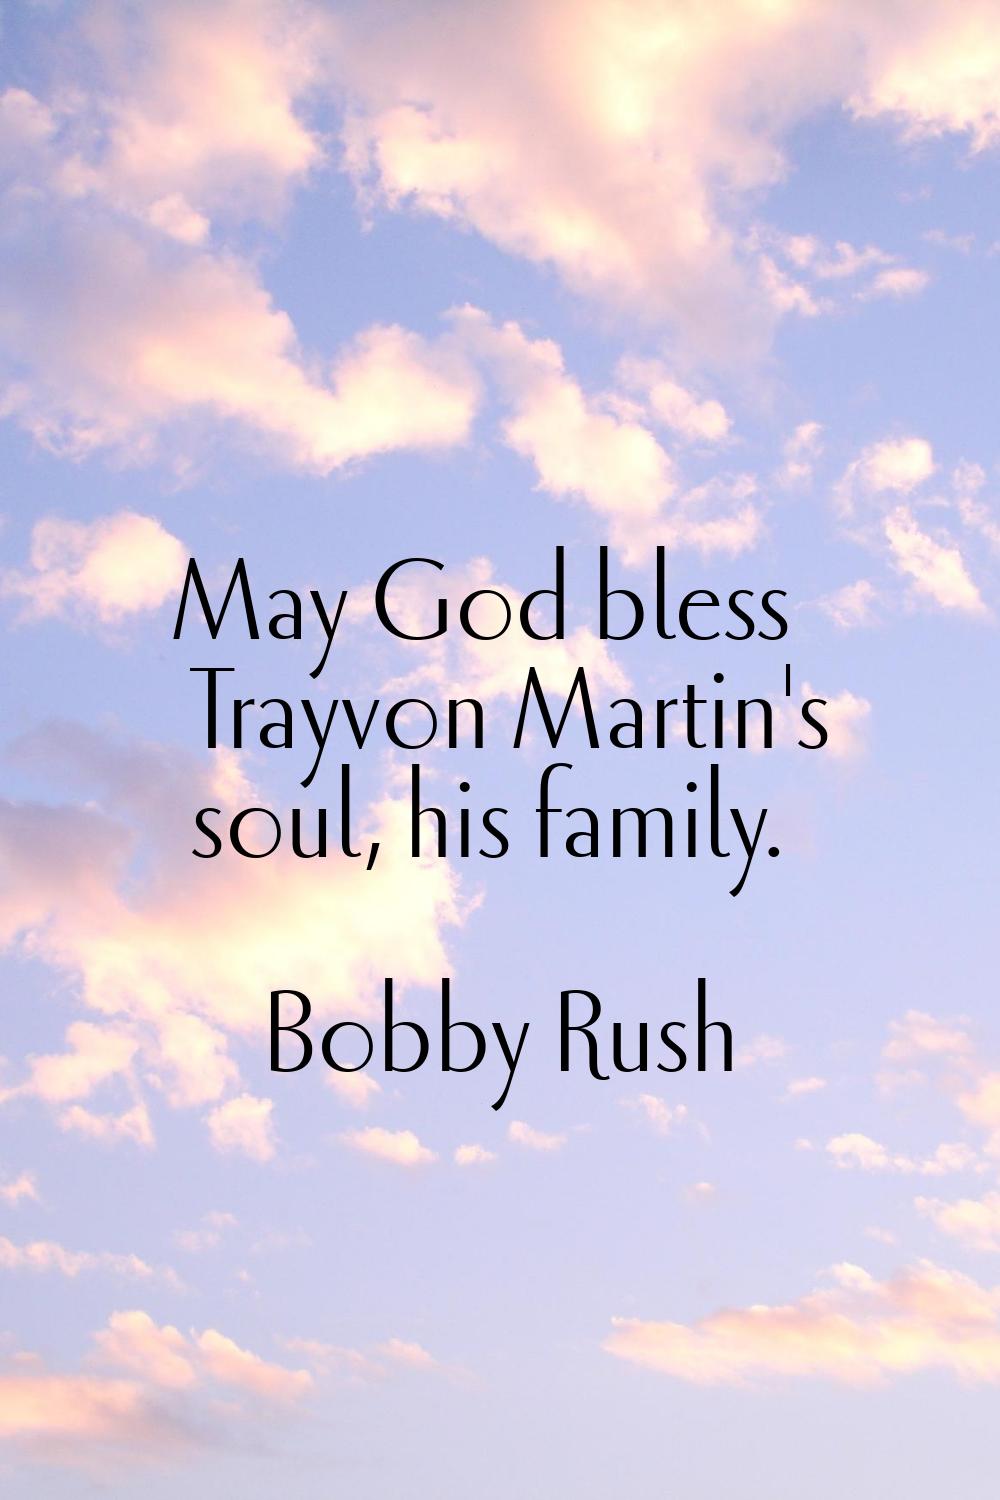 May God bless Trayvon Martin's soul, his family.